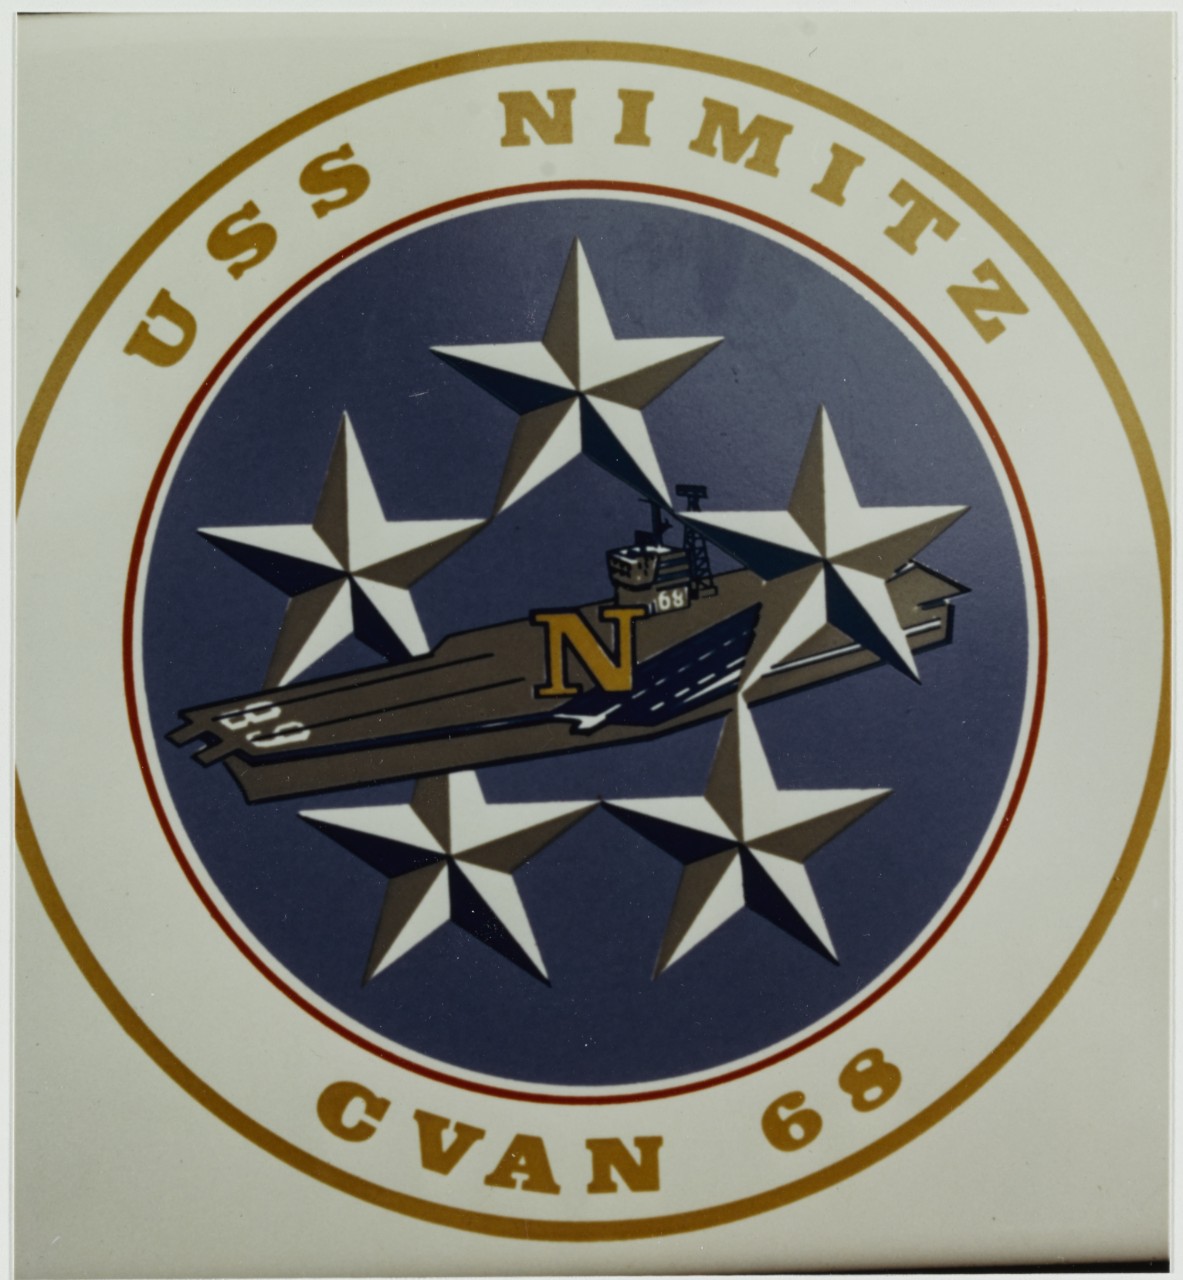 Insignia: USS NIMITZ (CVAN-68)